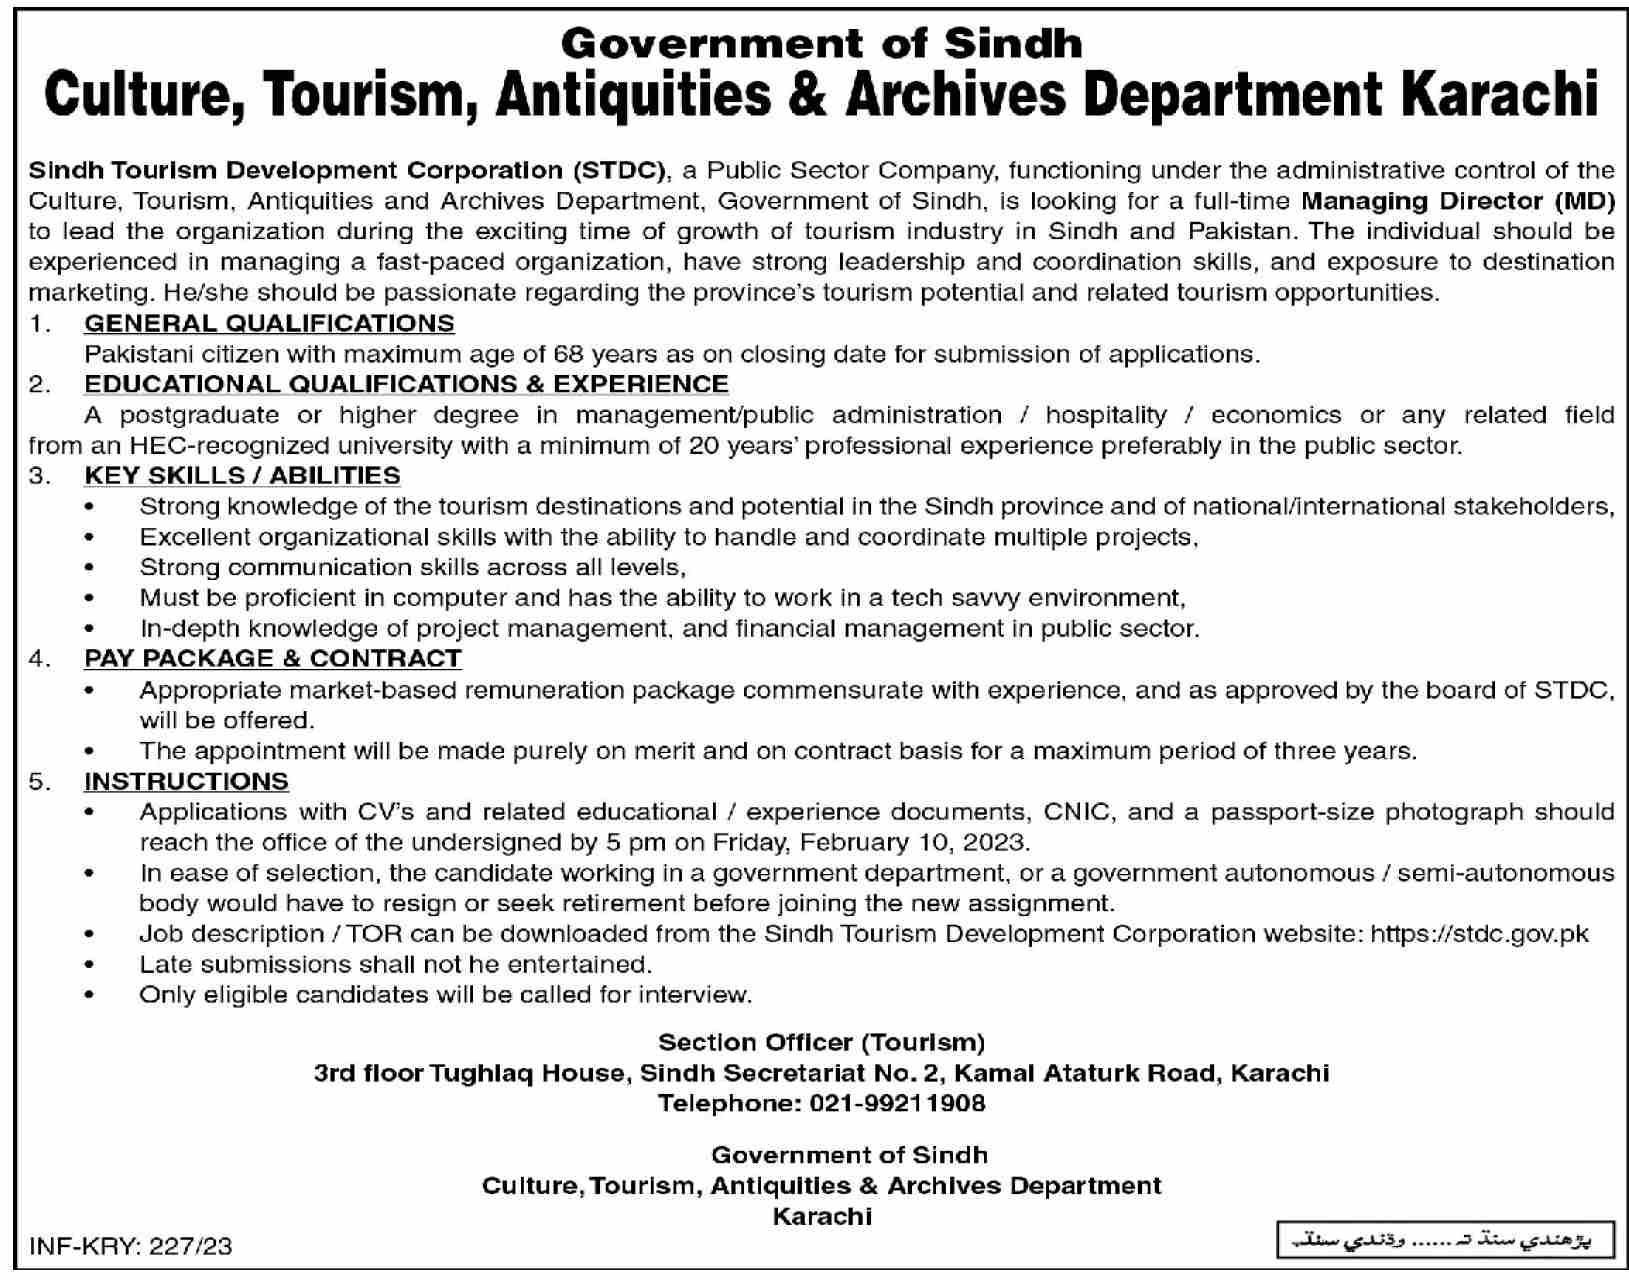 Latest Culture Tourism Department Jobs 2023 | Culture Tourism Antiquities & Archives Department Headquarters Announced Latest Recruitments